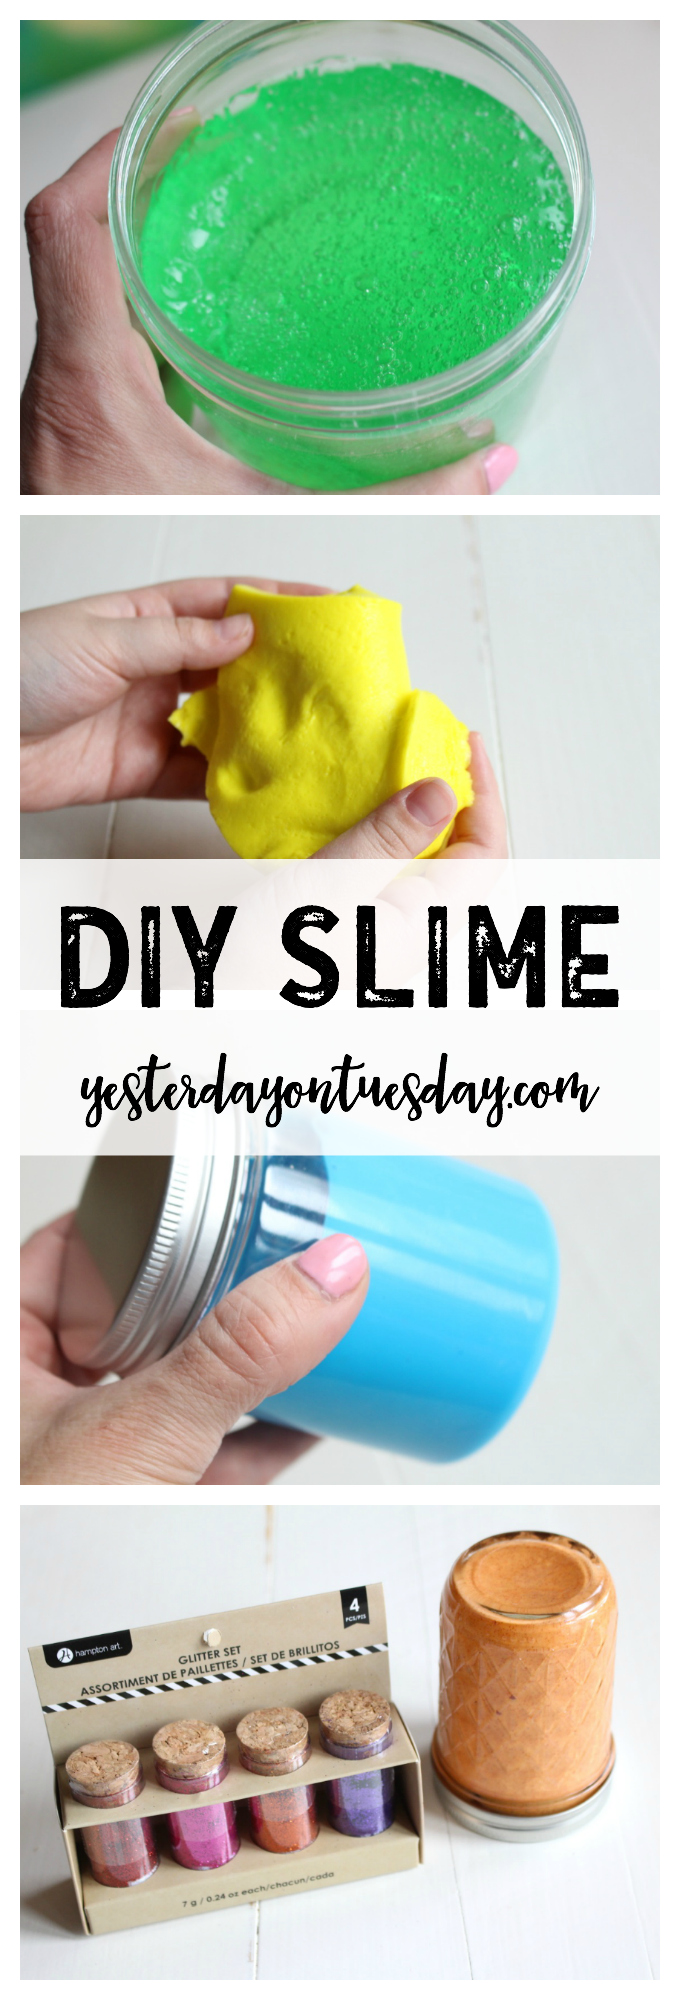 DIY Slime: How to make slime at home including shot slime, colored slime and glitter slime.